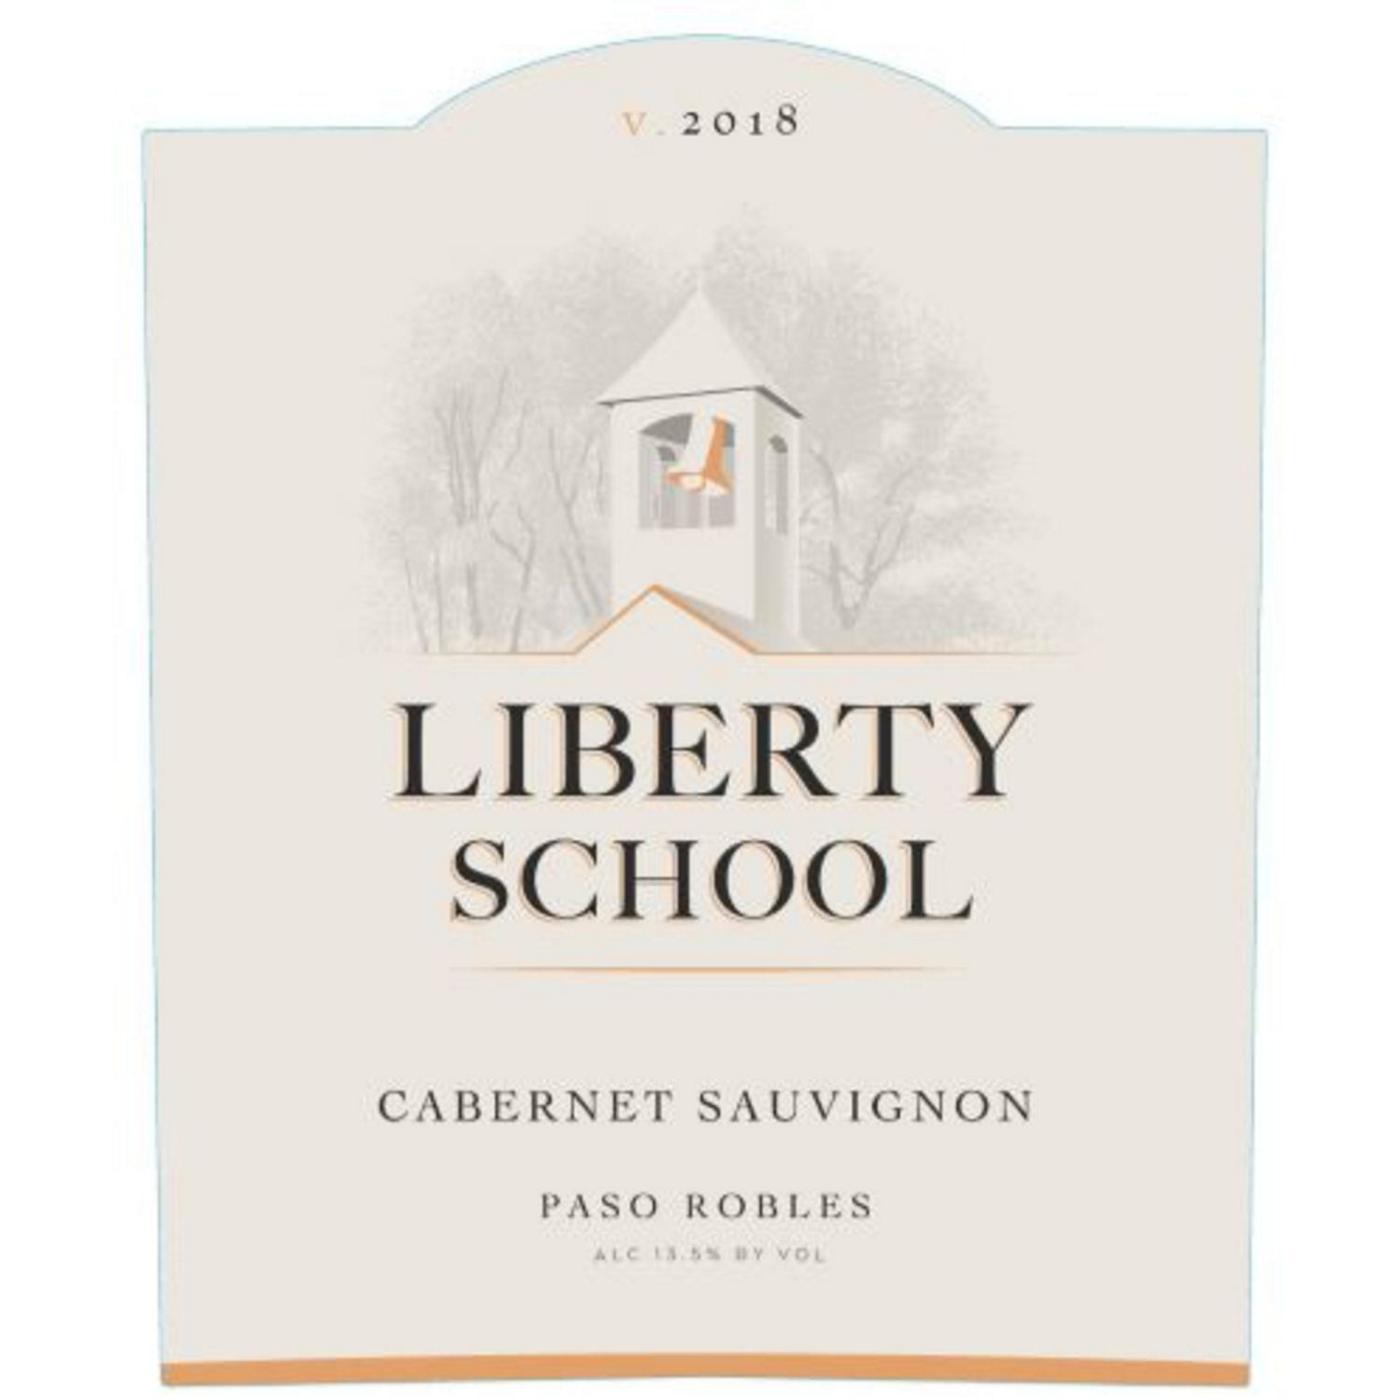 Liberty School Cabernet Sauvignon; image 7 of 7